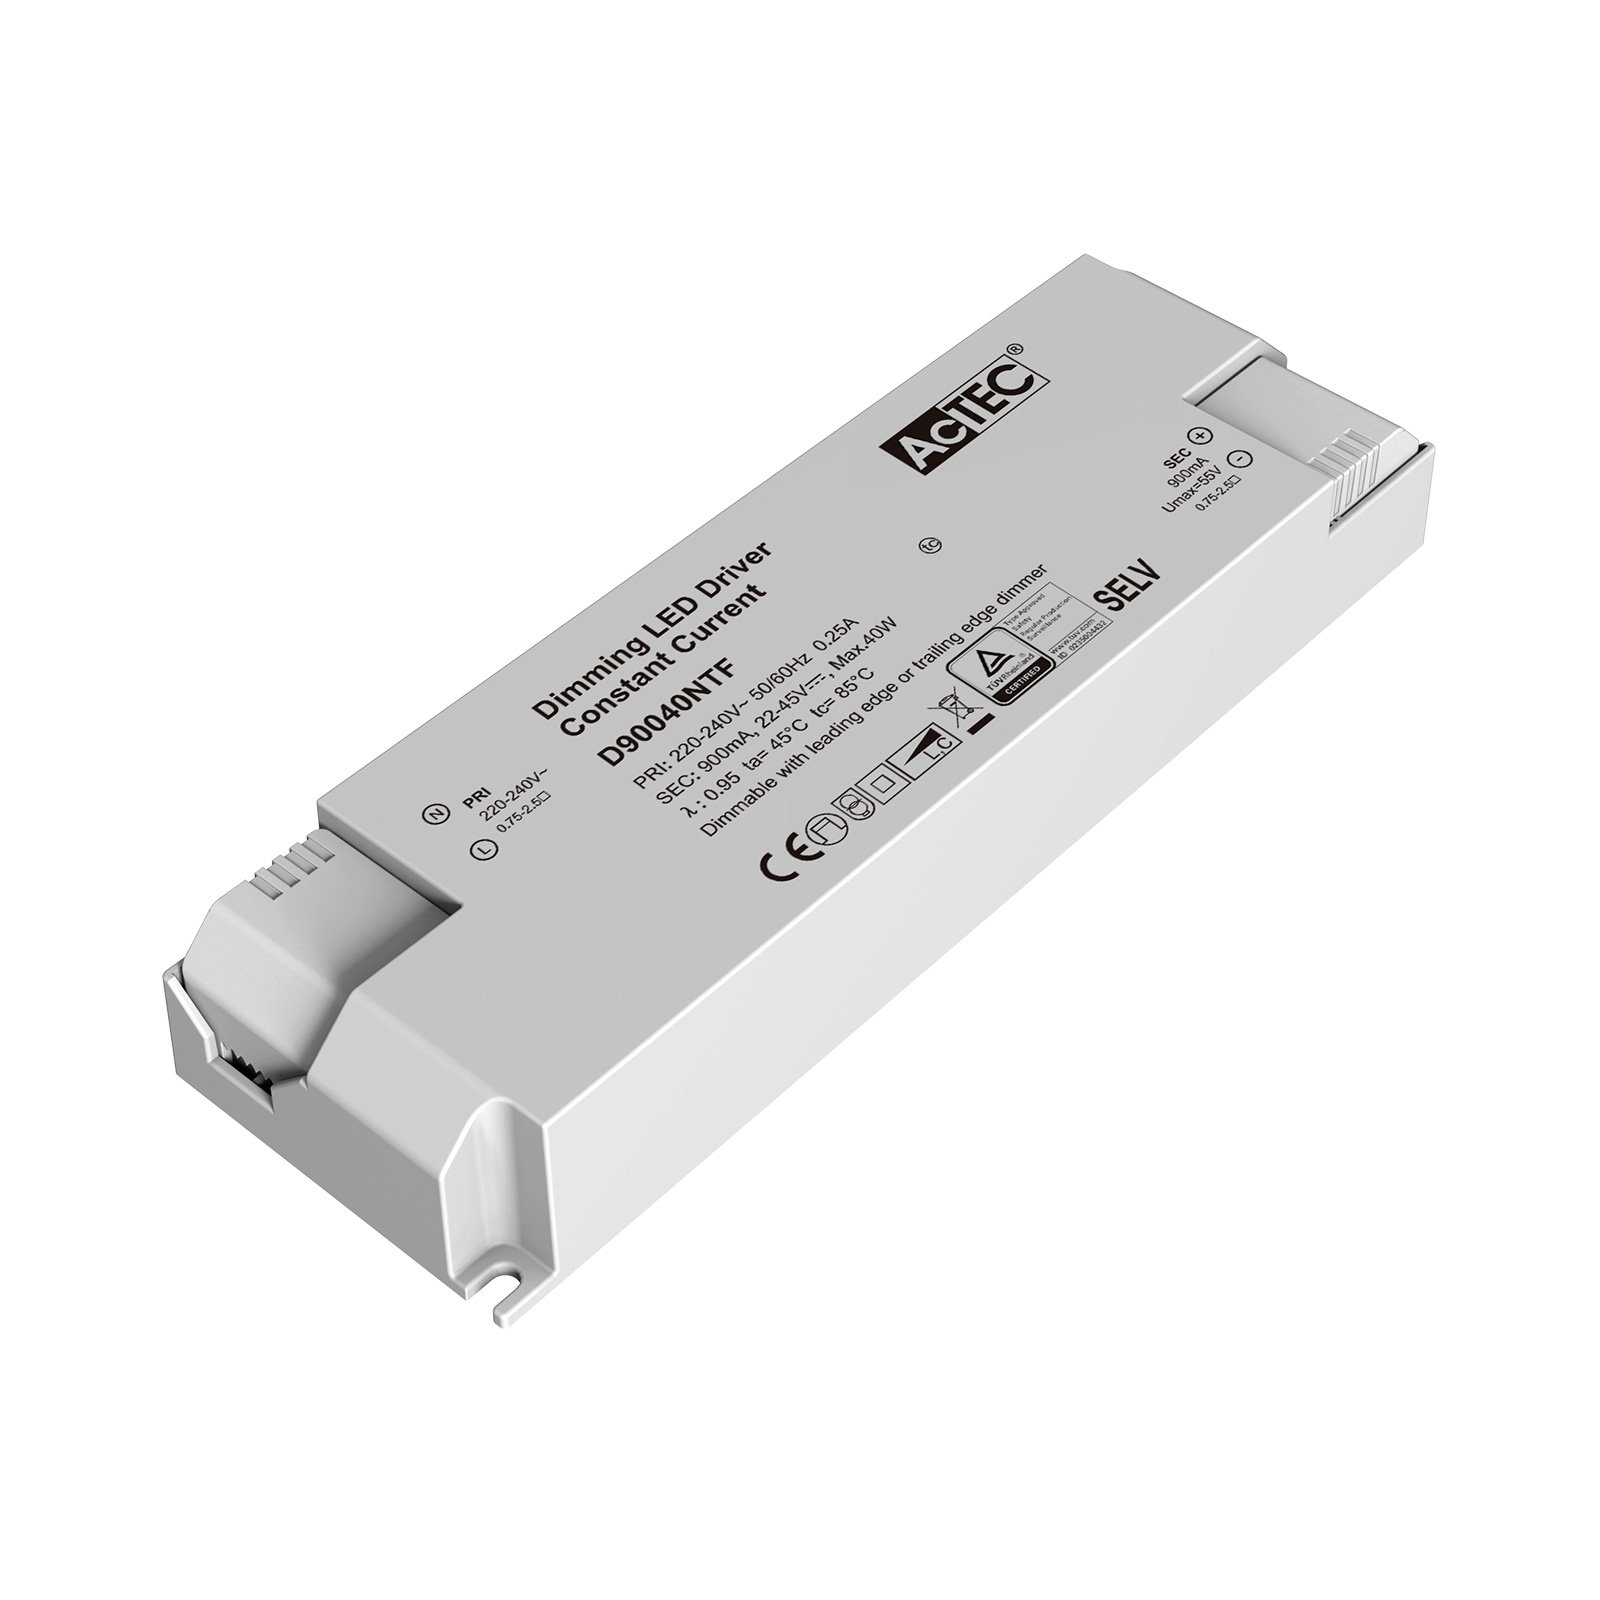 AcTEC Triac LED vezérlő CC max. 40W 900mA